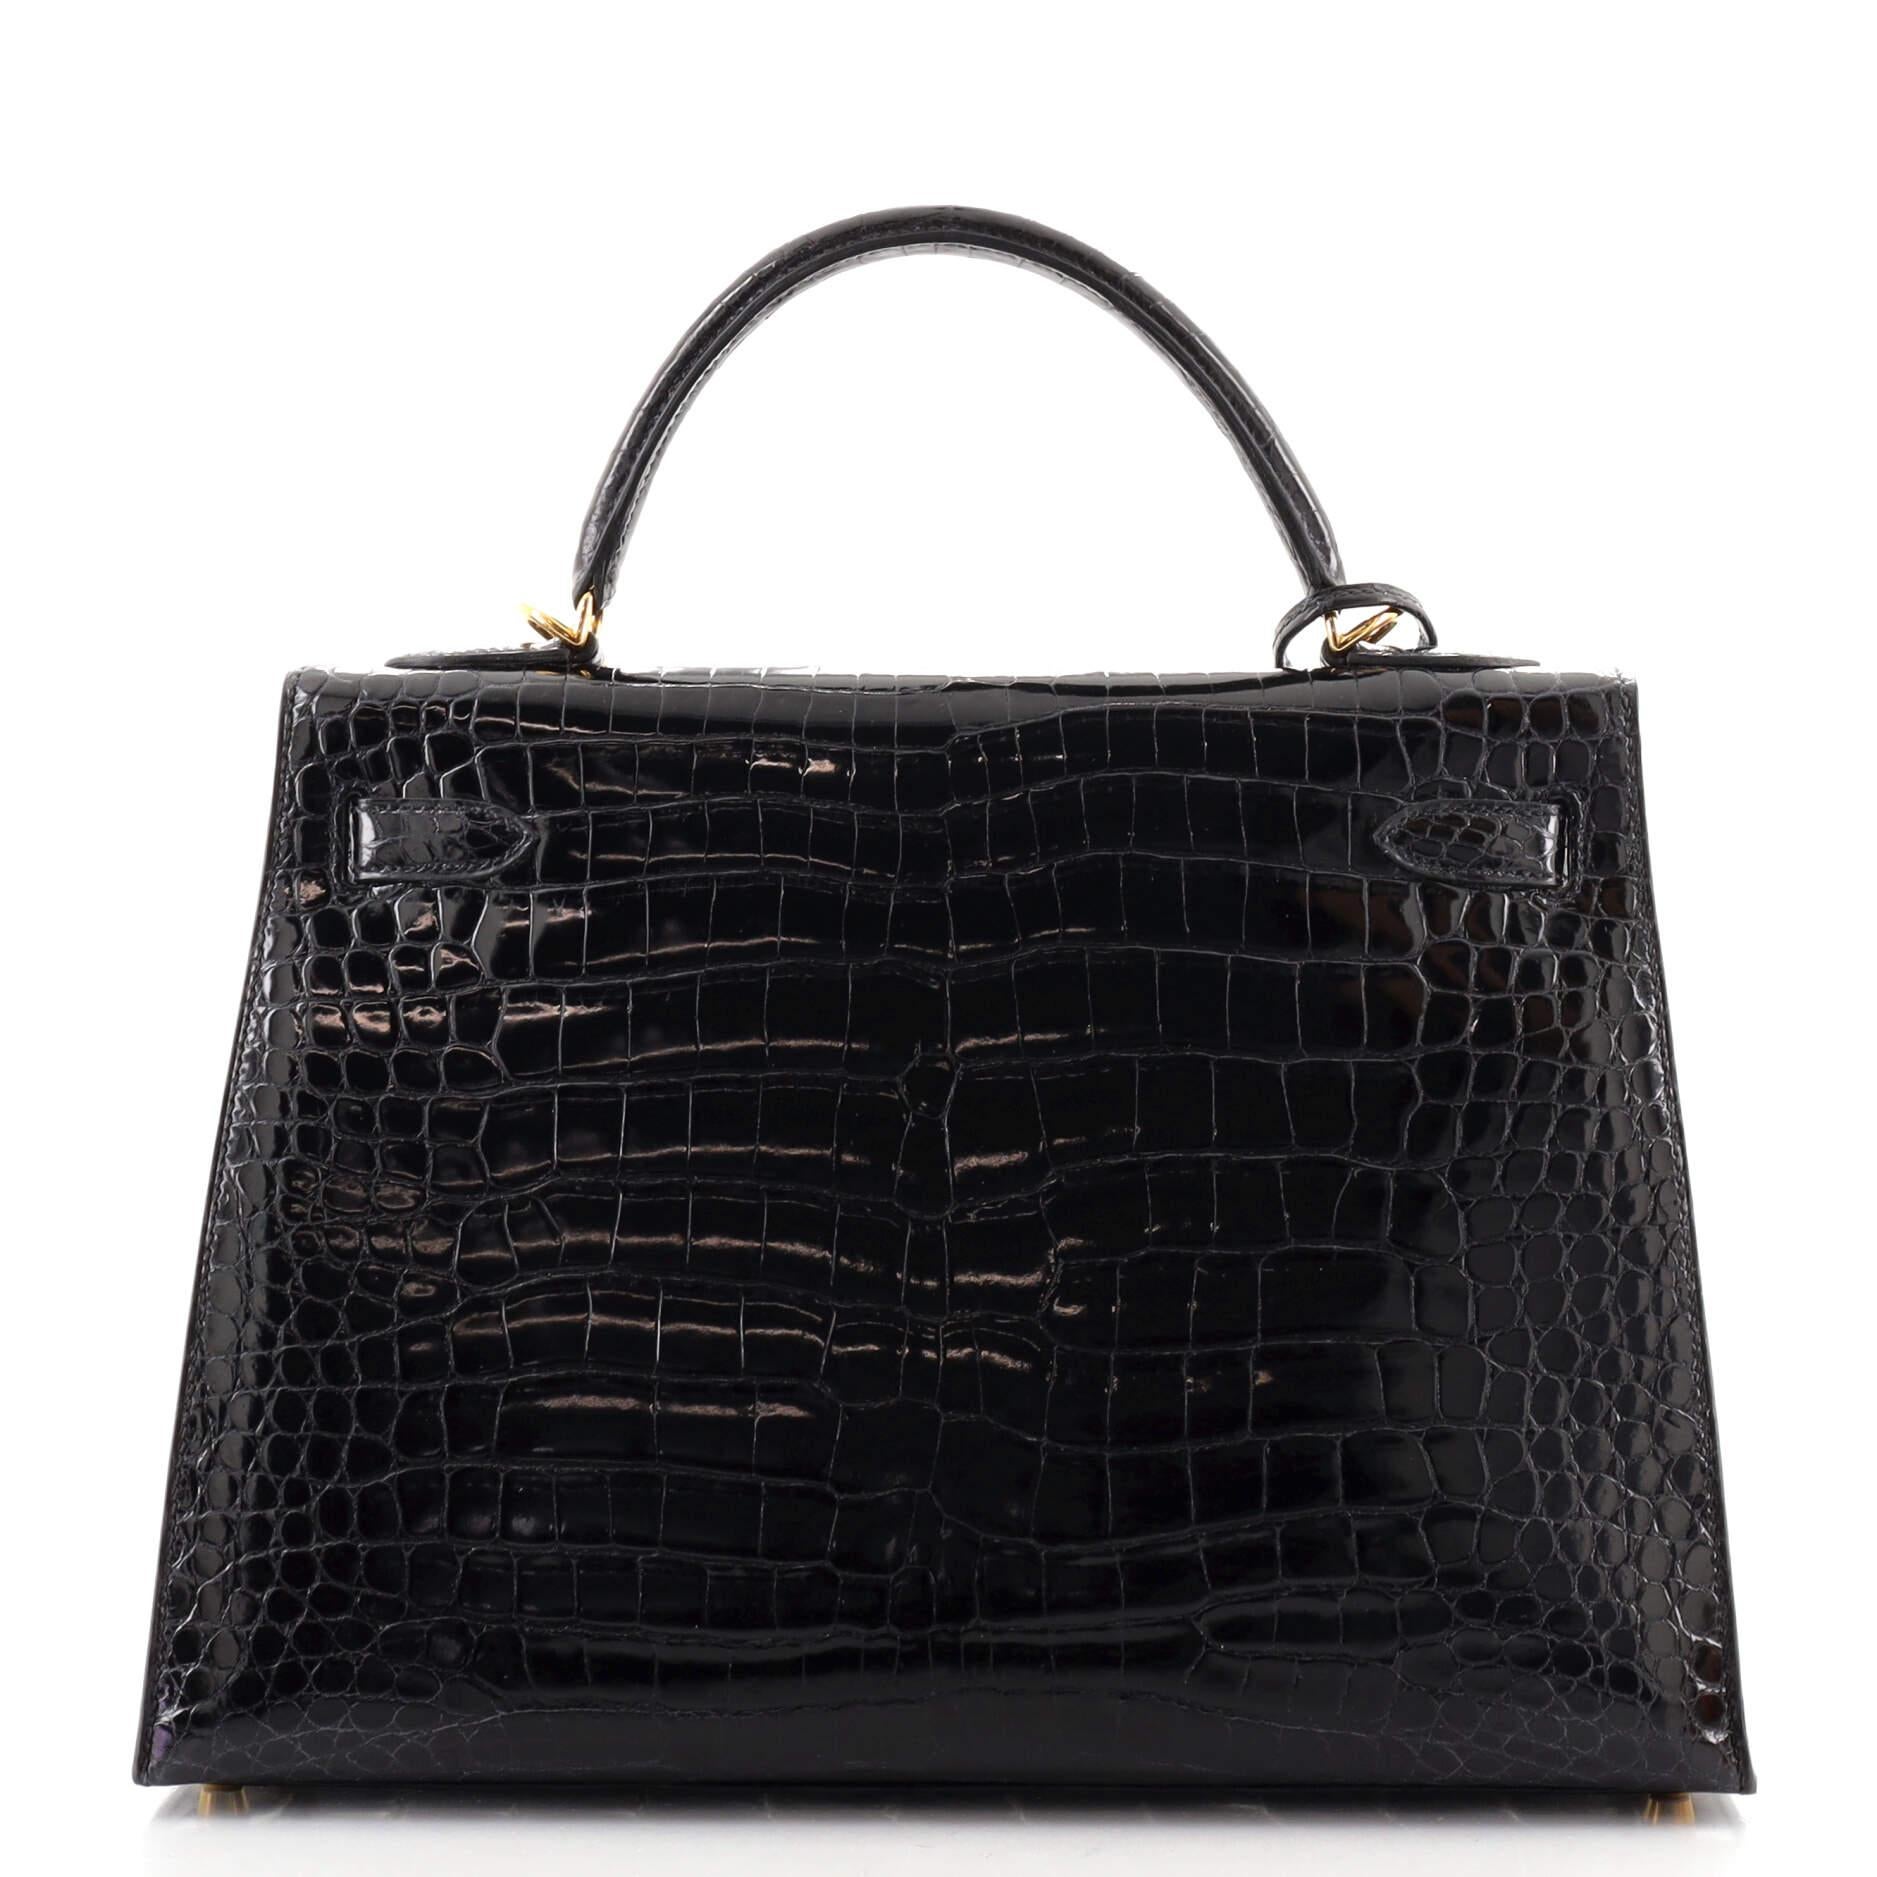 Black Hermes Kelly Handbag Noir Shiny Porosus Crocodile with Gold Hardware 32